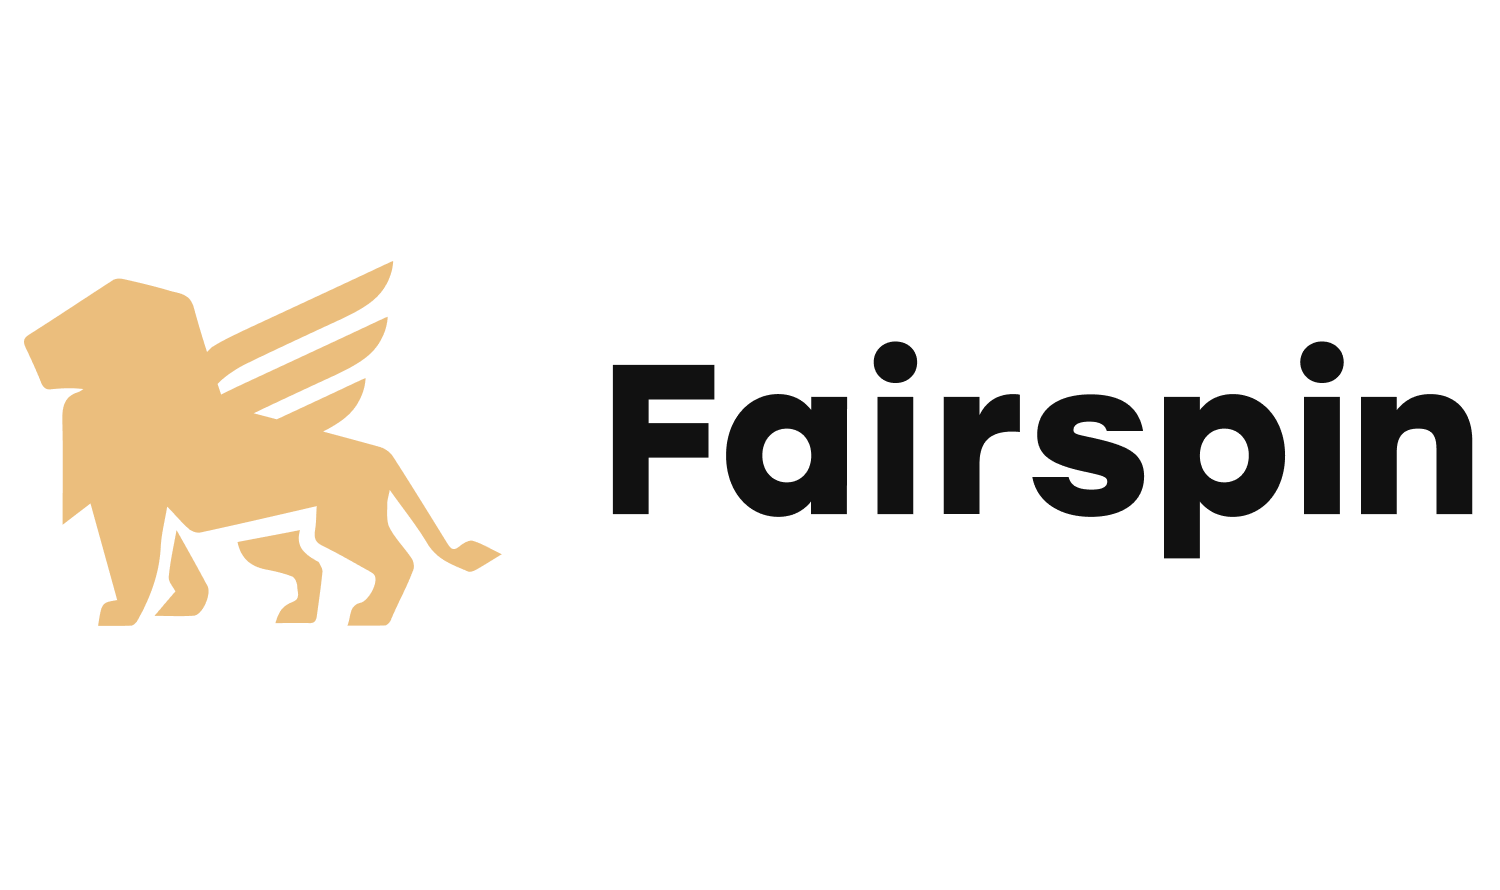 fairspin casino logo